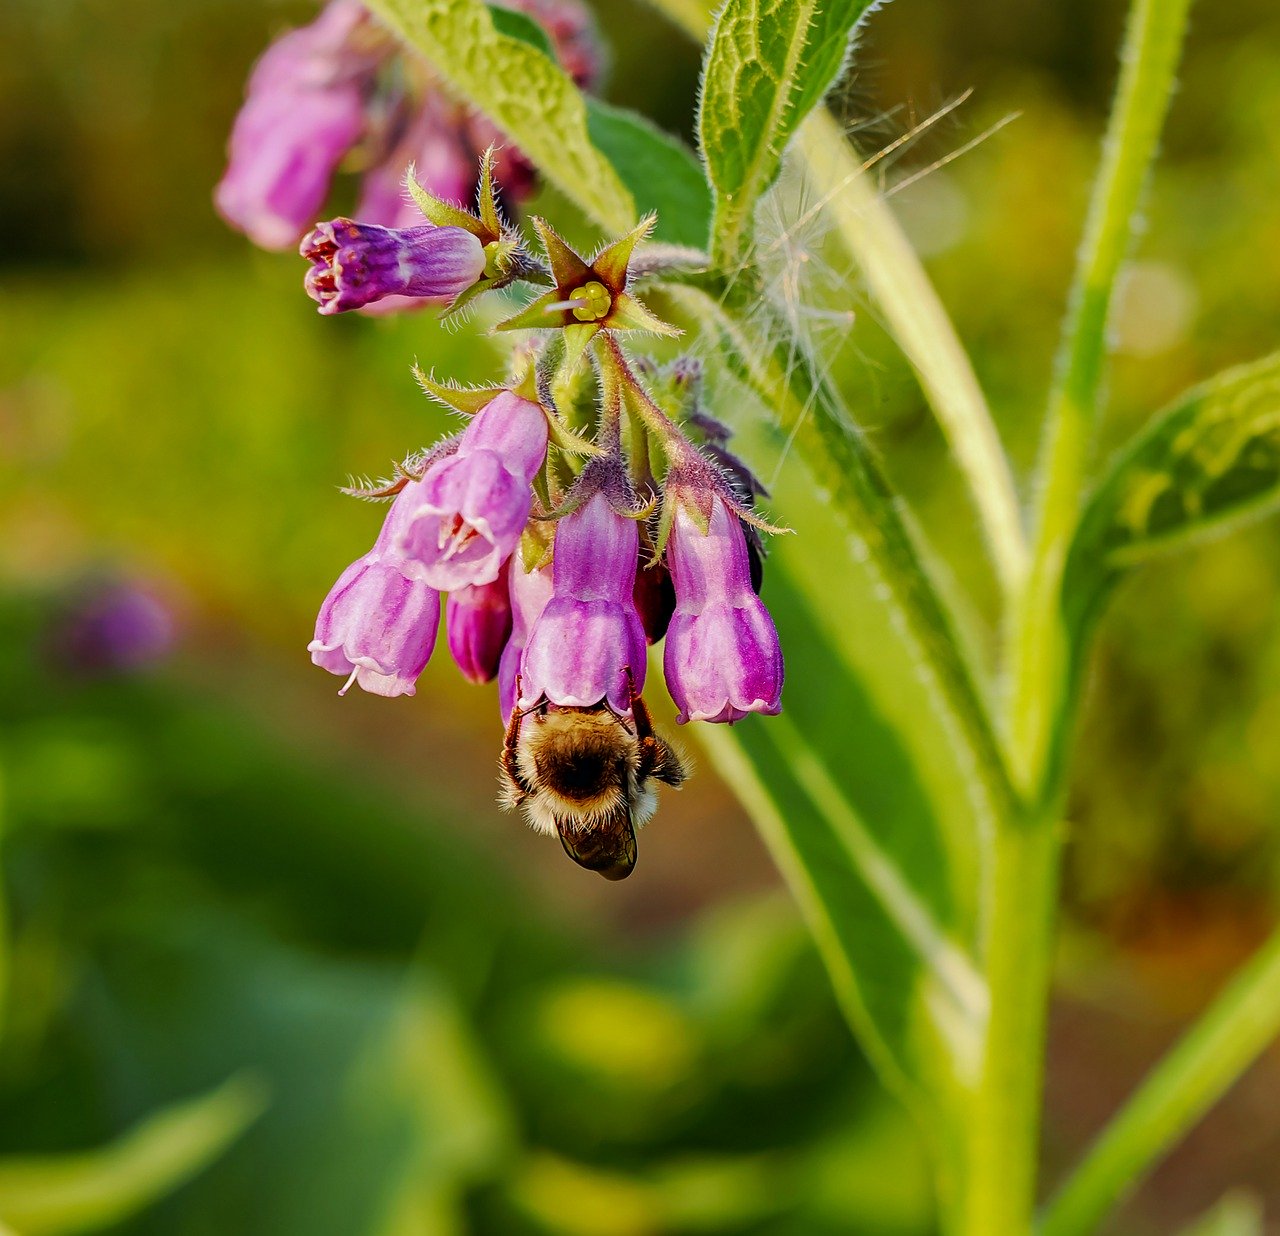 Common cofrey flower with bee